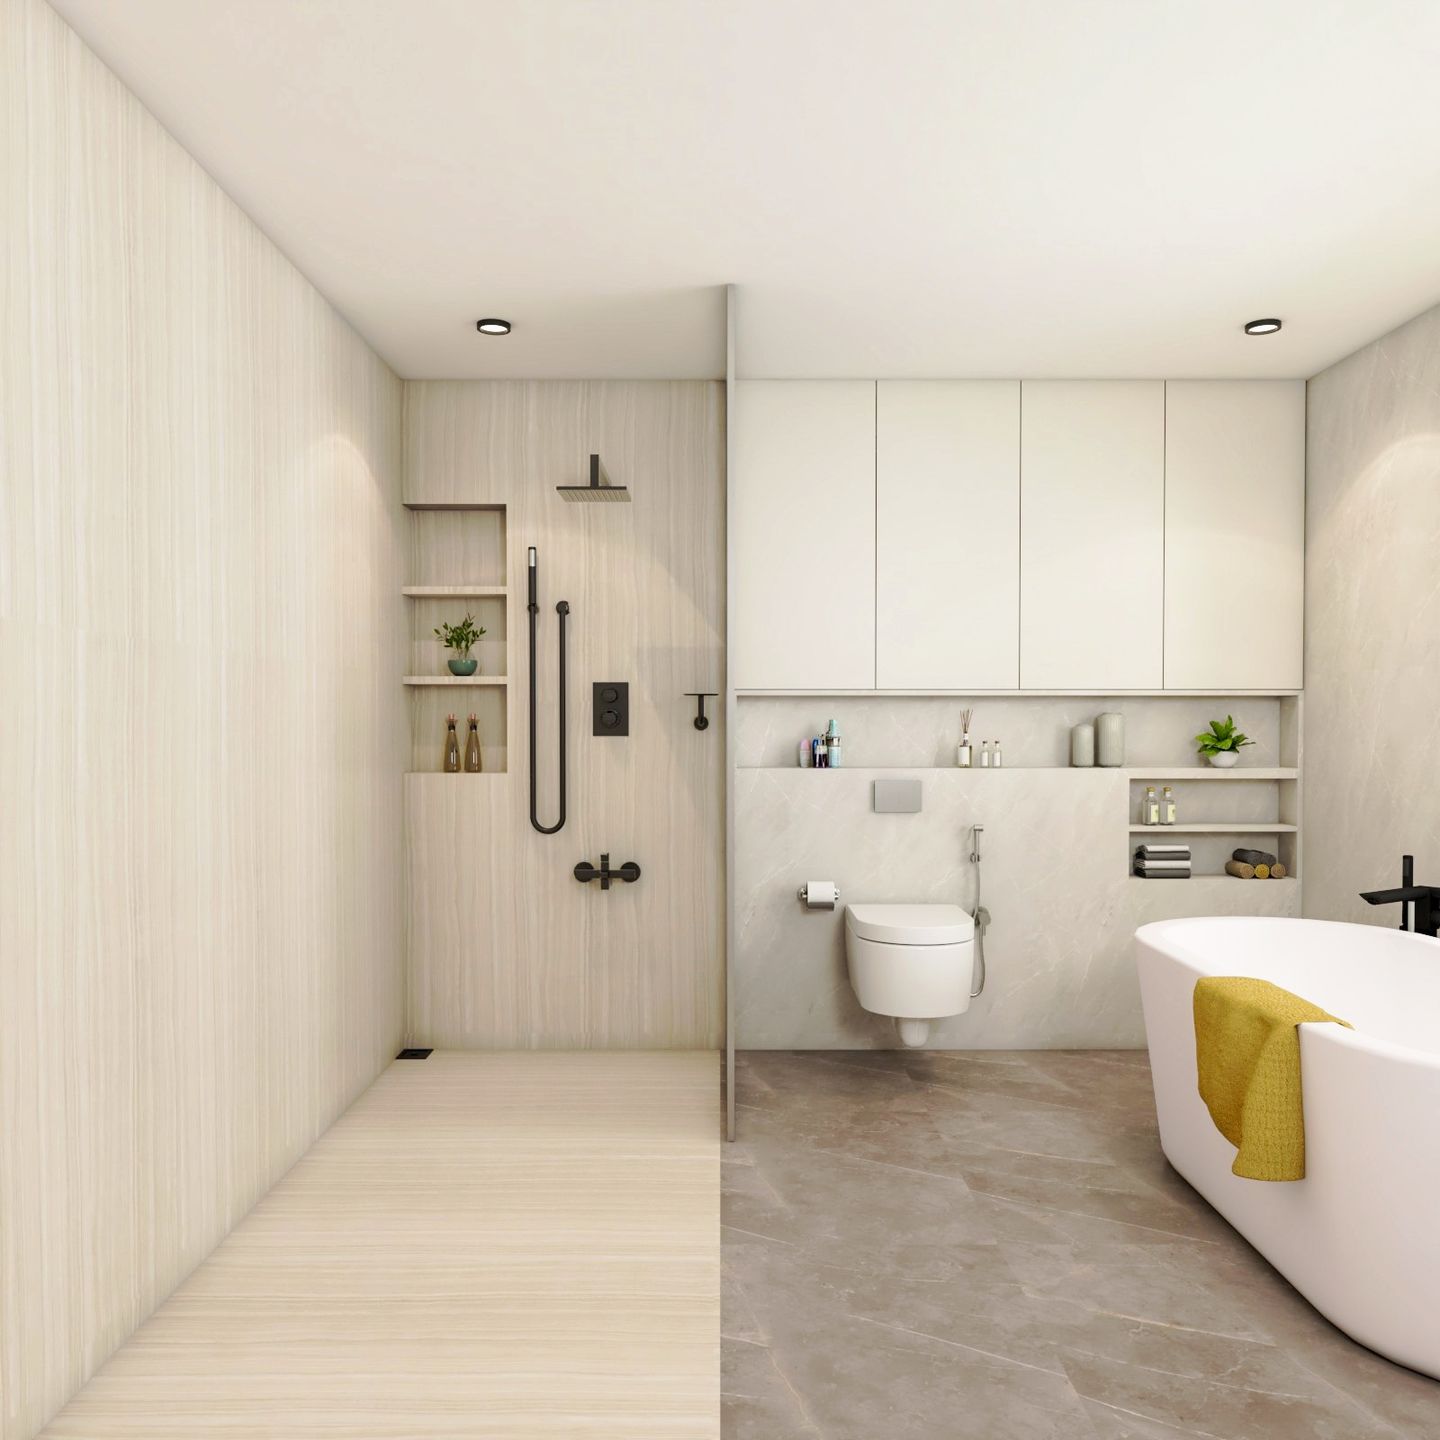 Brown And White Bathroom Design With Bathtub - Livspace